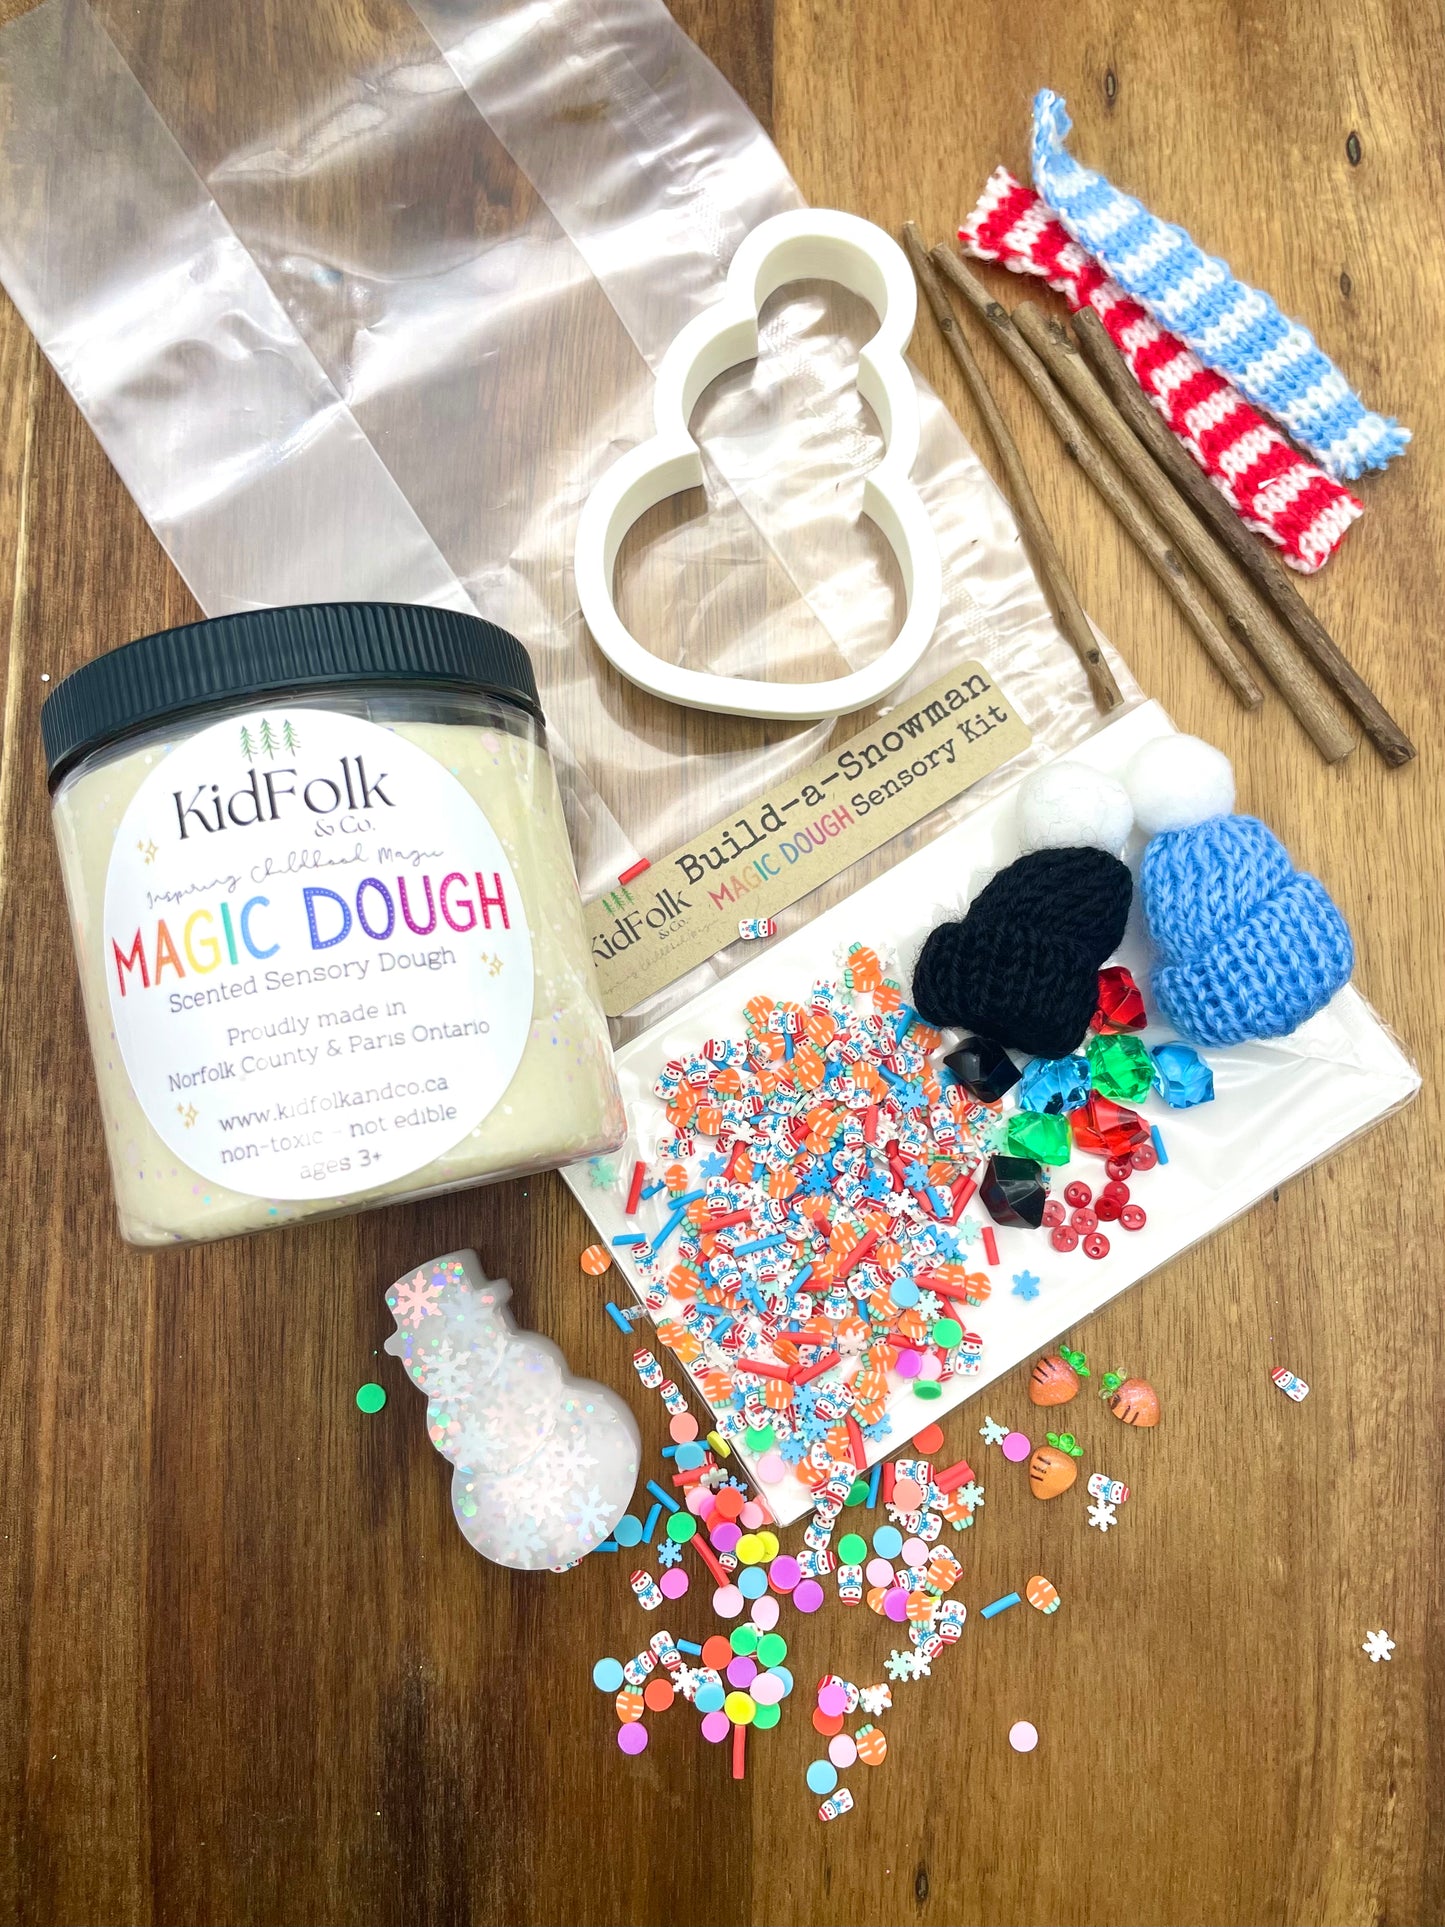 Build-a-Snowman - Magic Dough Sensory Play Kit